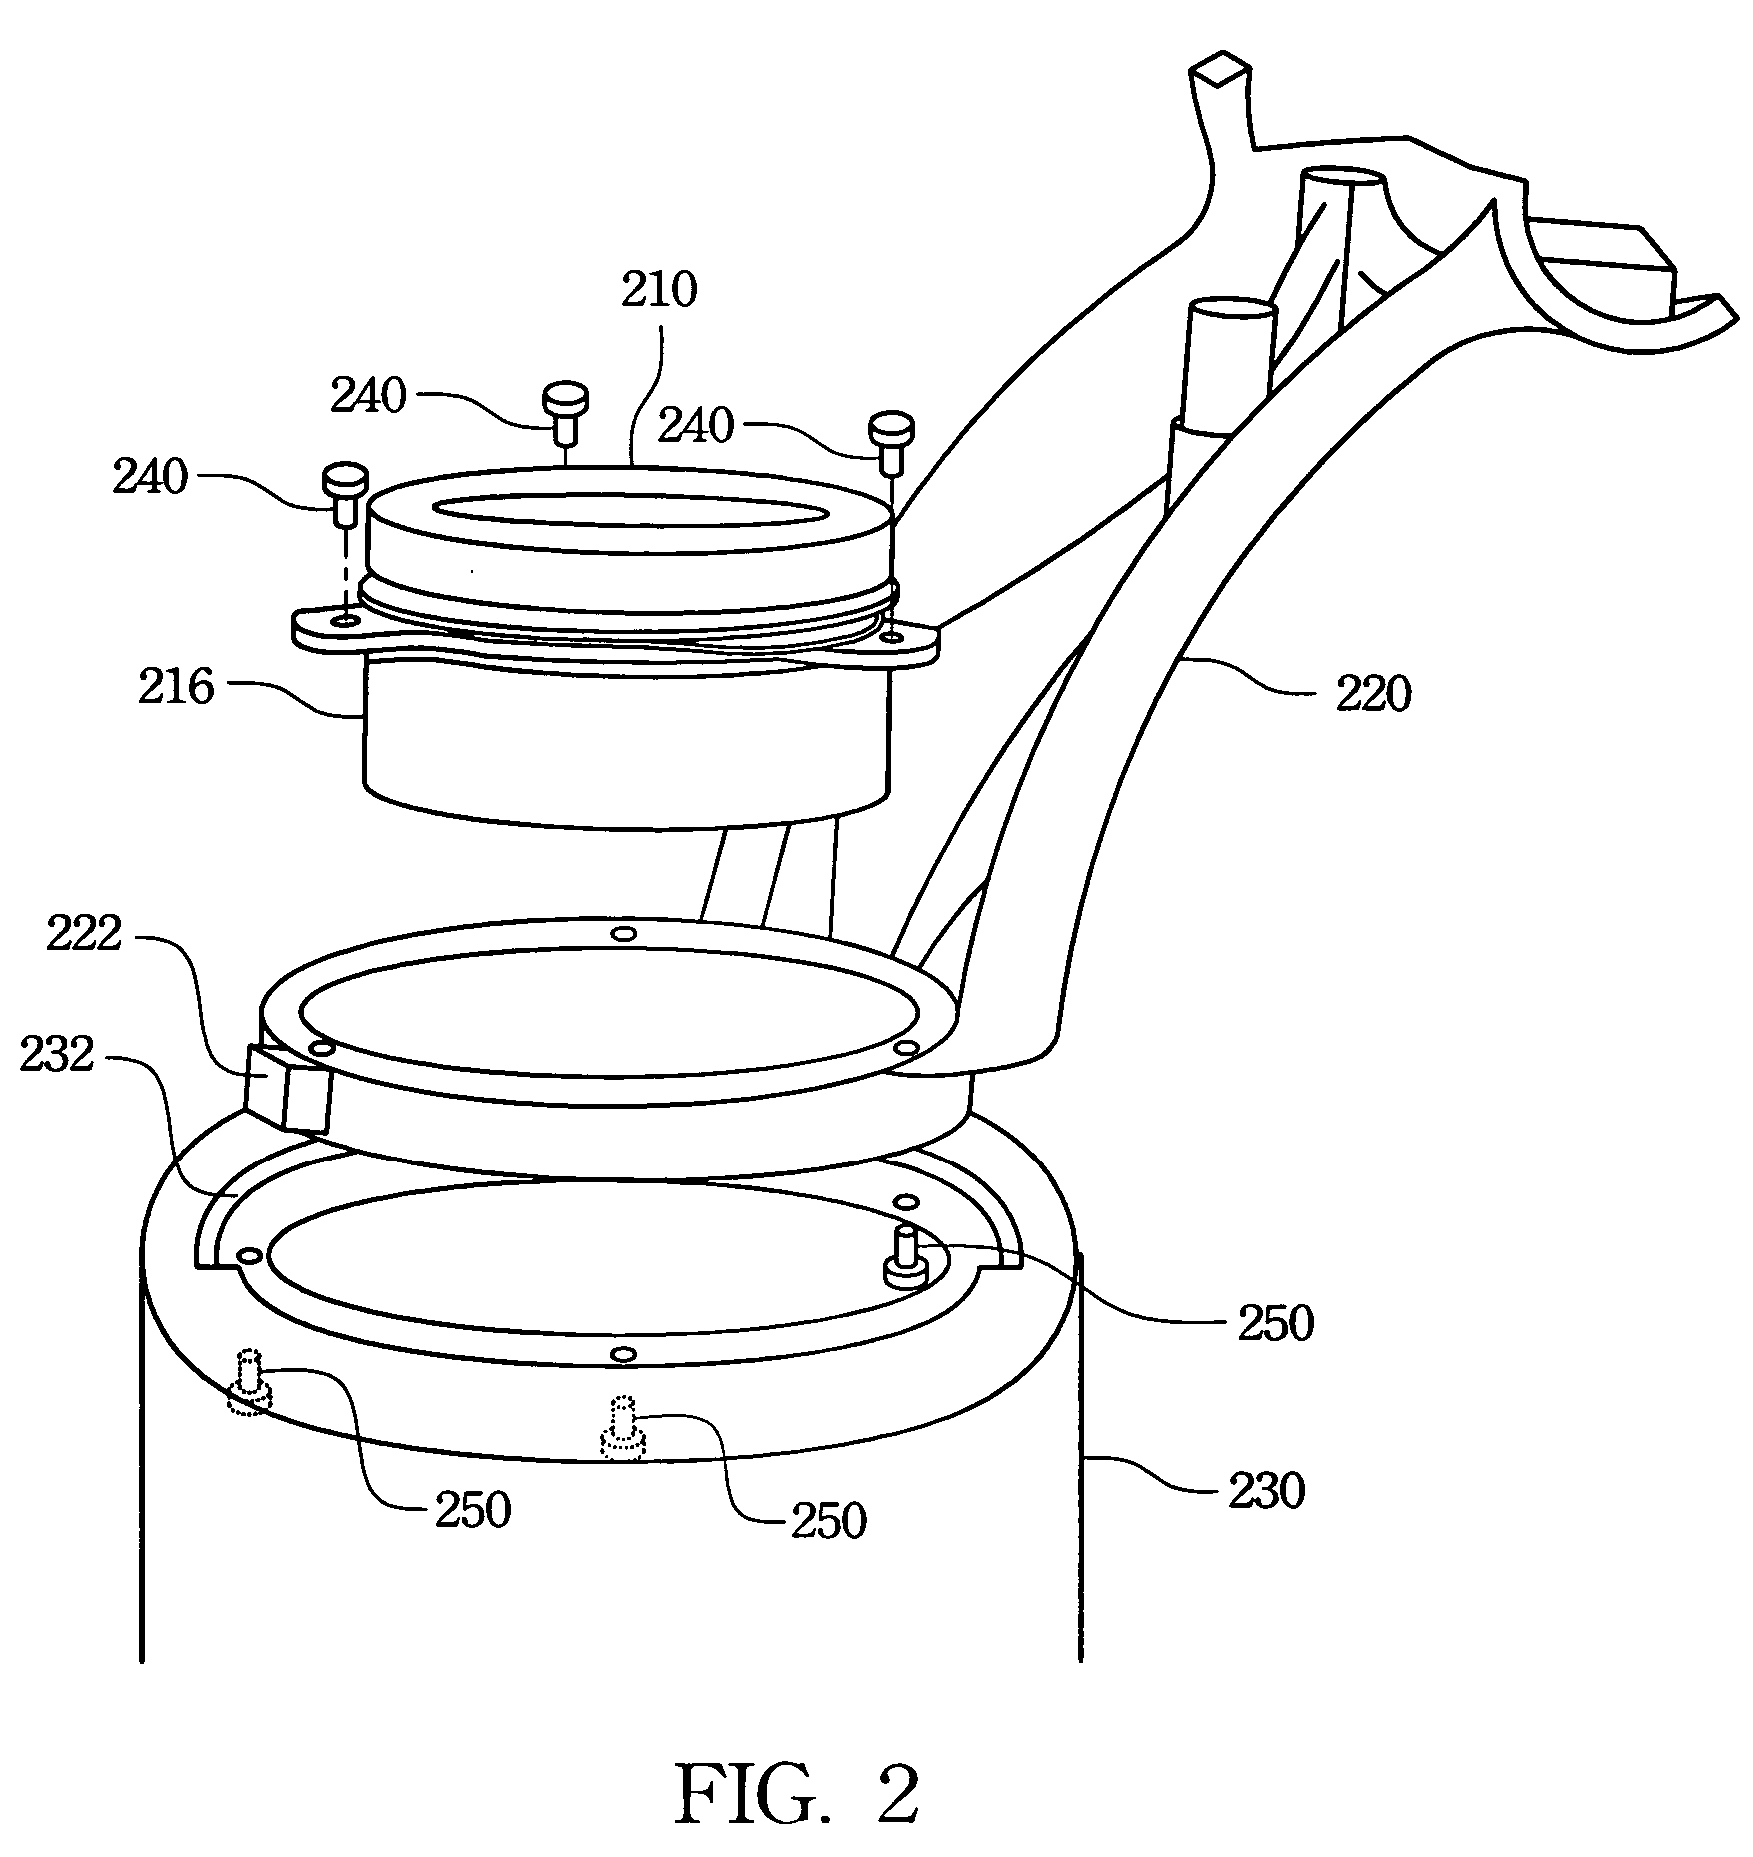 Torque-controlled rotational module